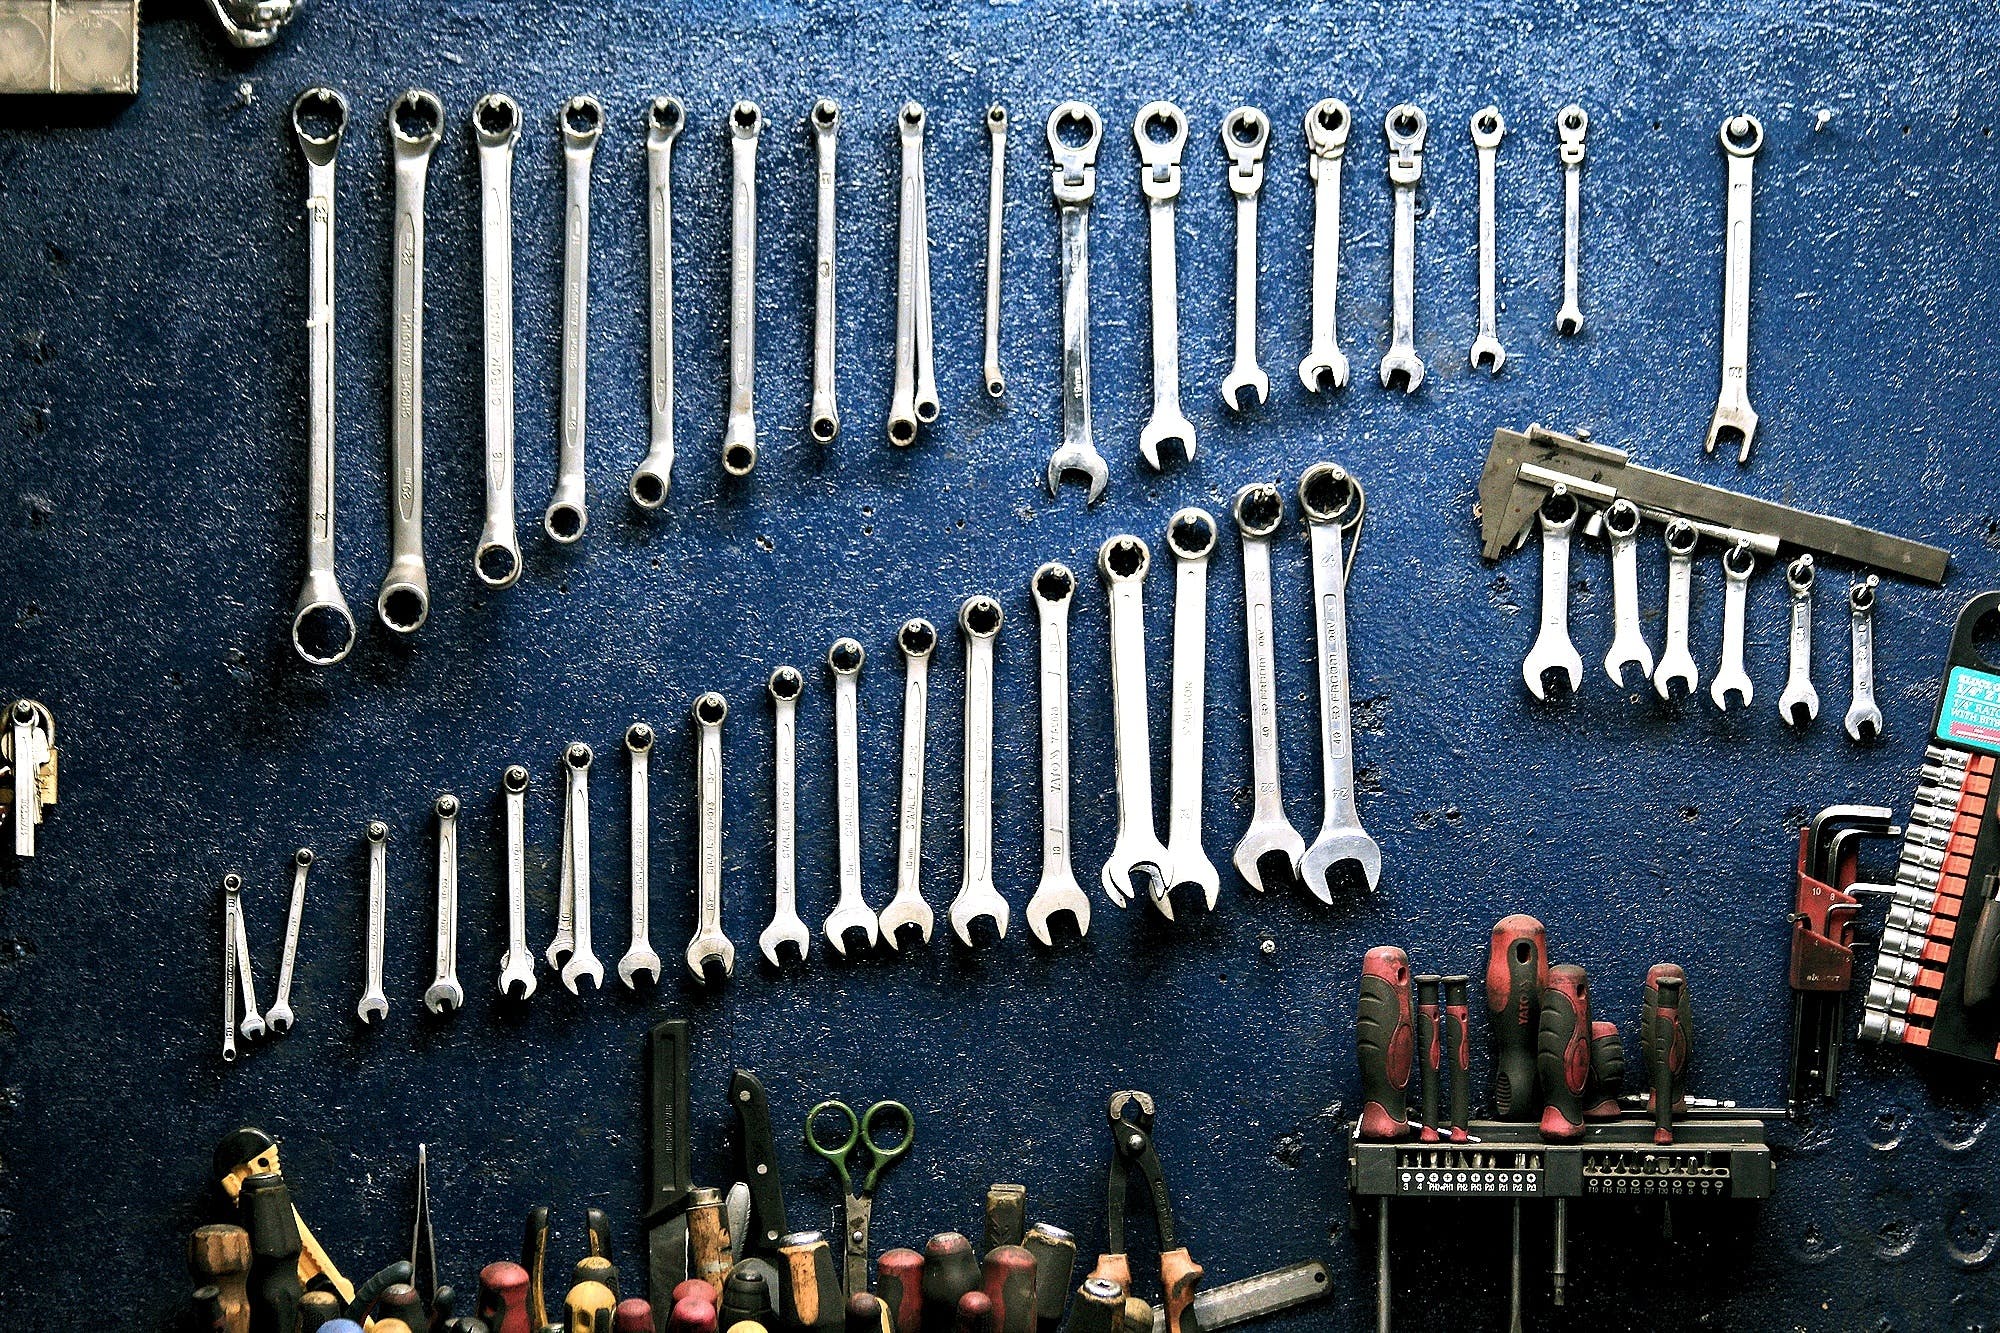 image of garage tools laid on the floor